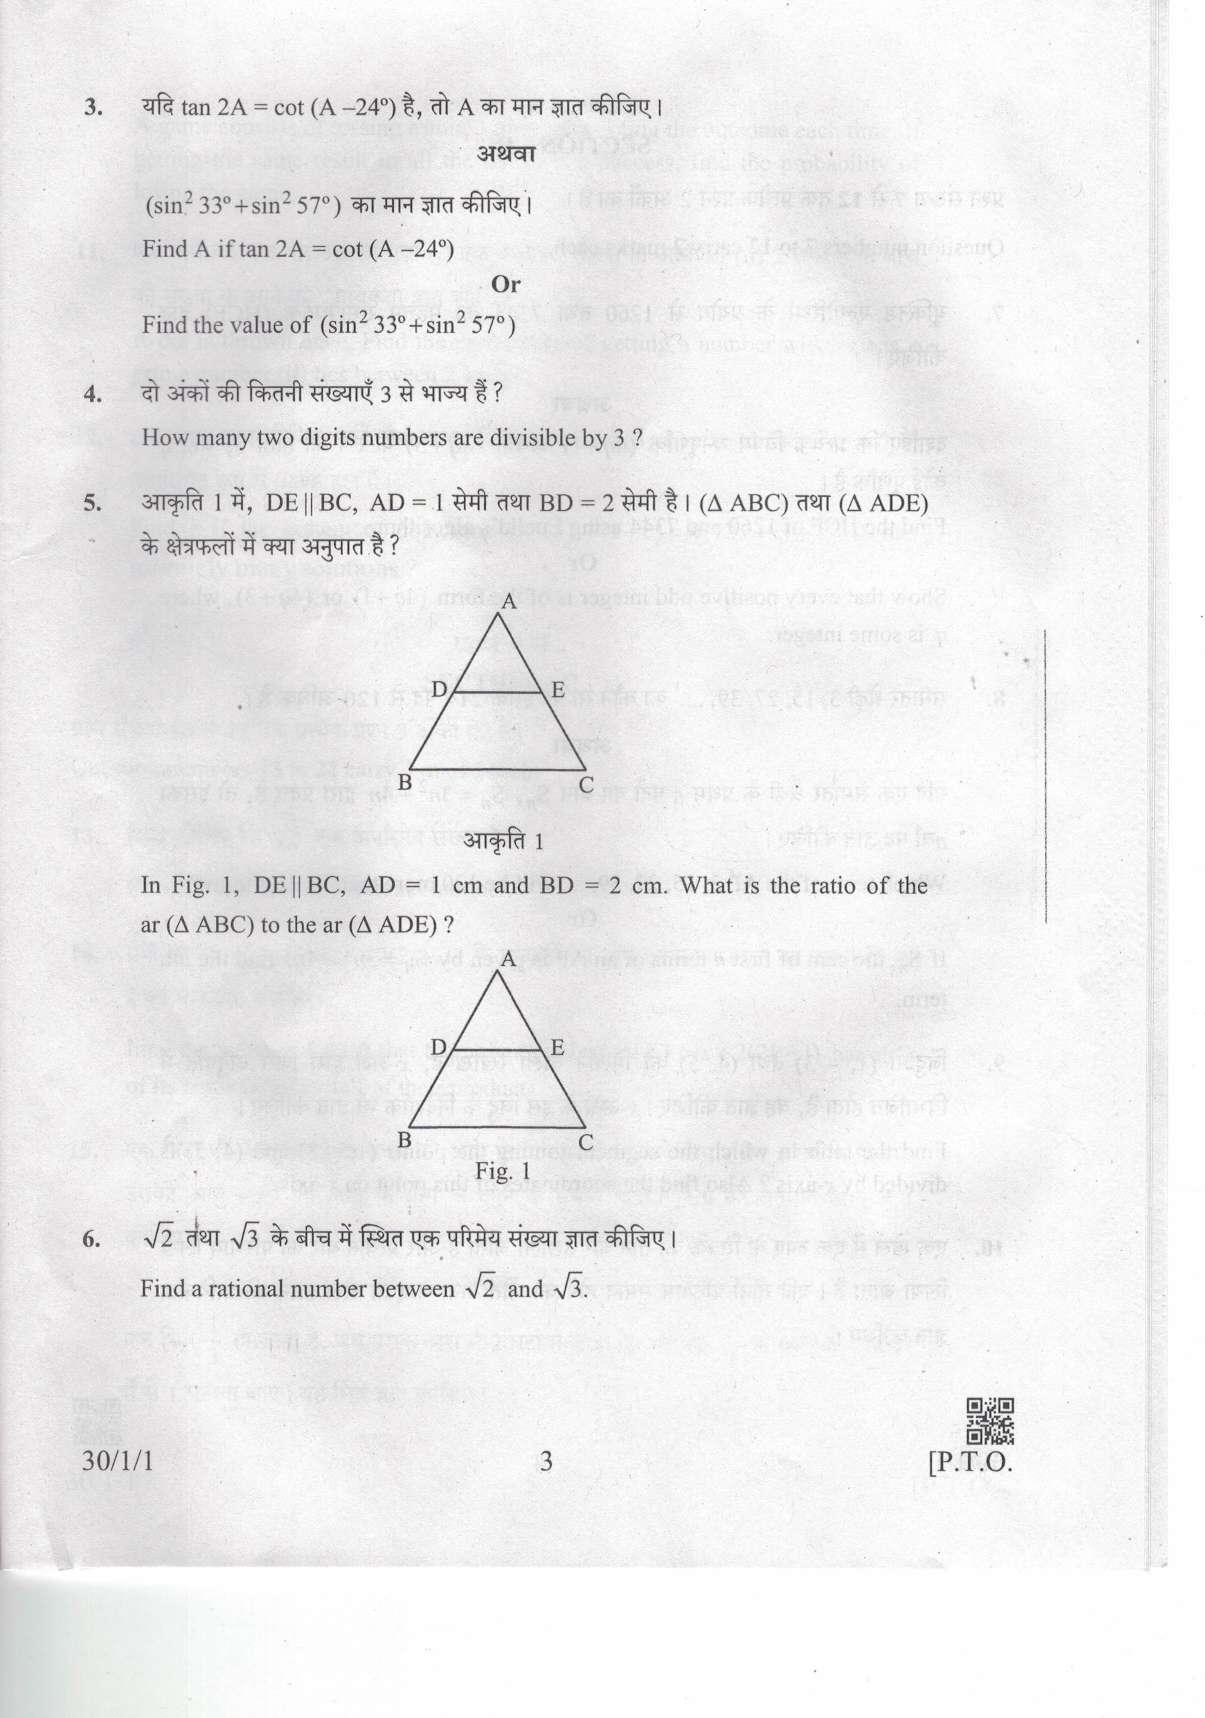 CBSE Class 10 30-1-1 Mathematics 2019 Question Paper - Page 3